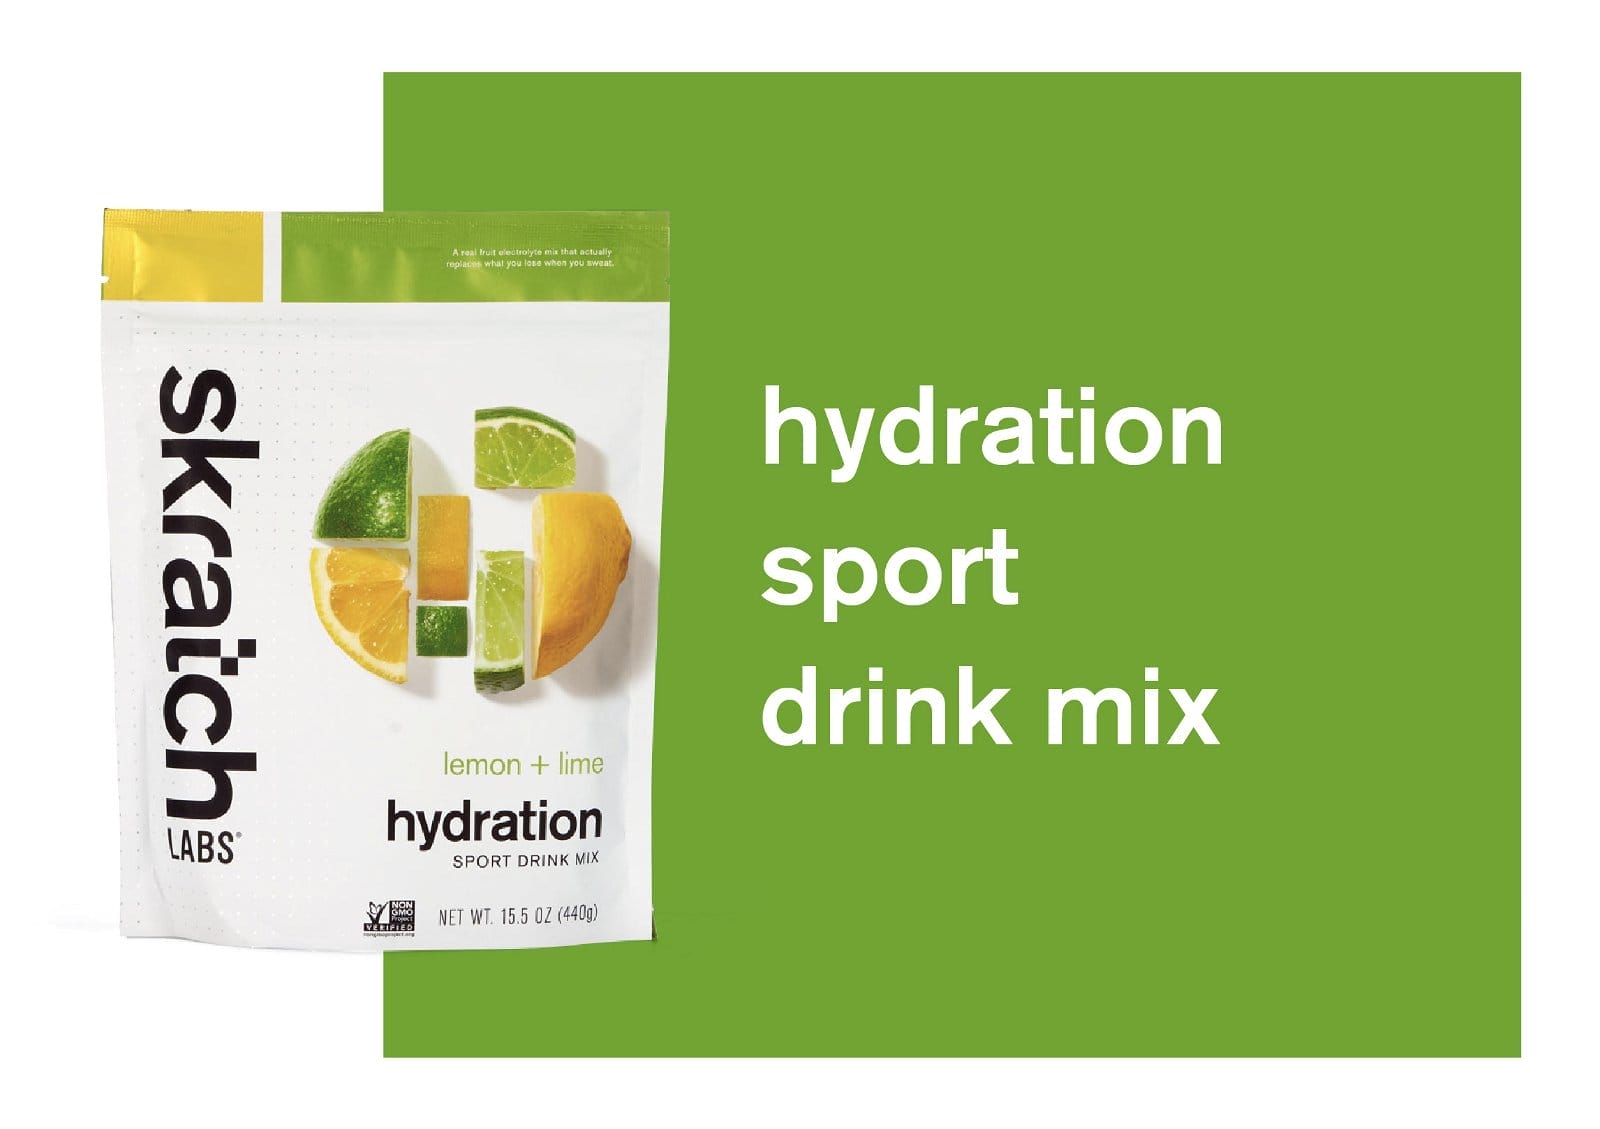 hydration sport drink mix